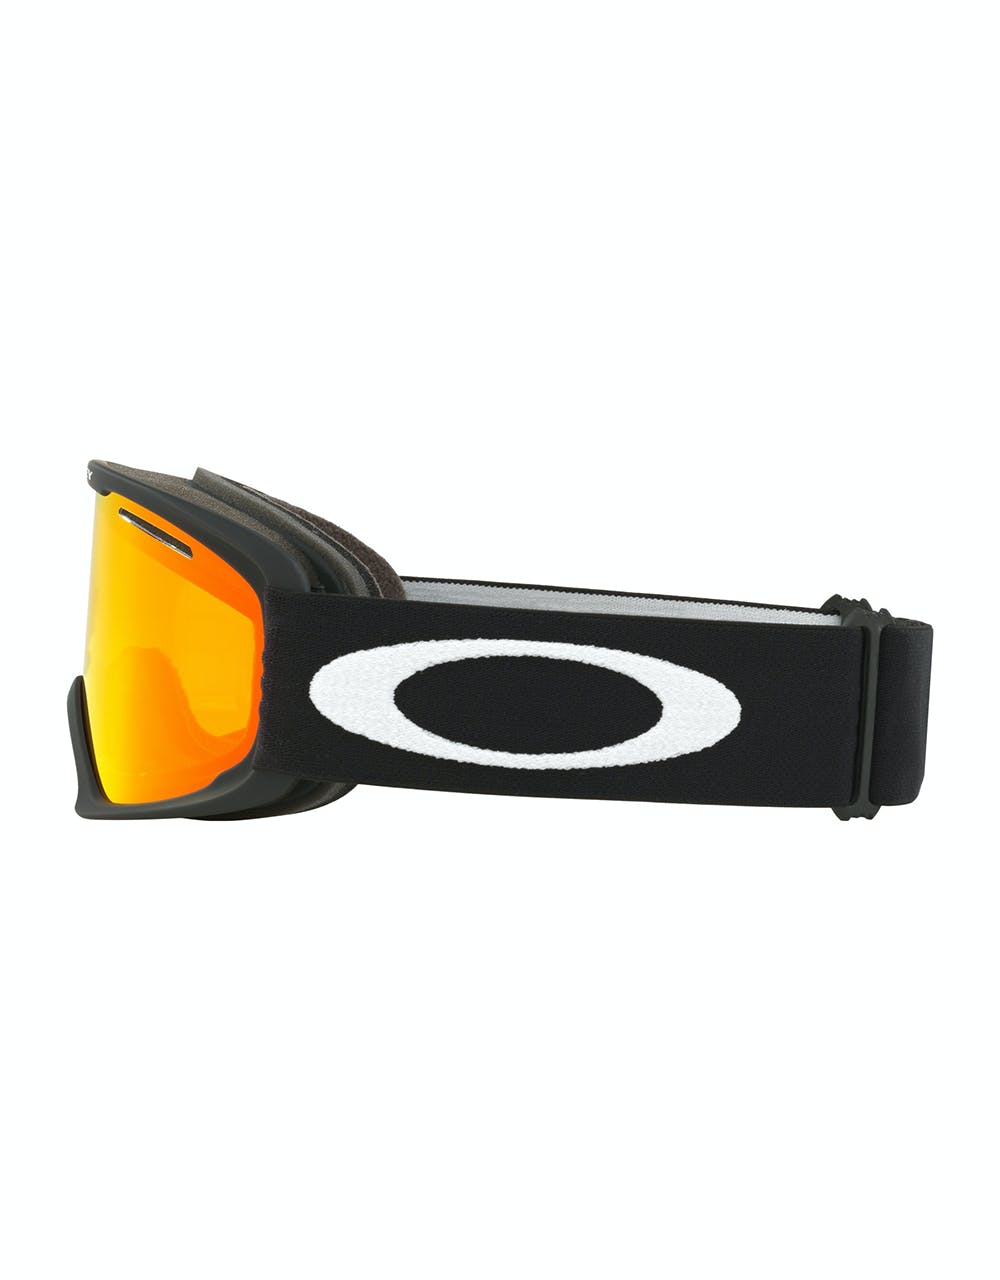 Oakley O Frame 2.0 Pro XL Snowboard Goggles - Black/Fire Iridium